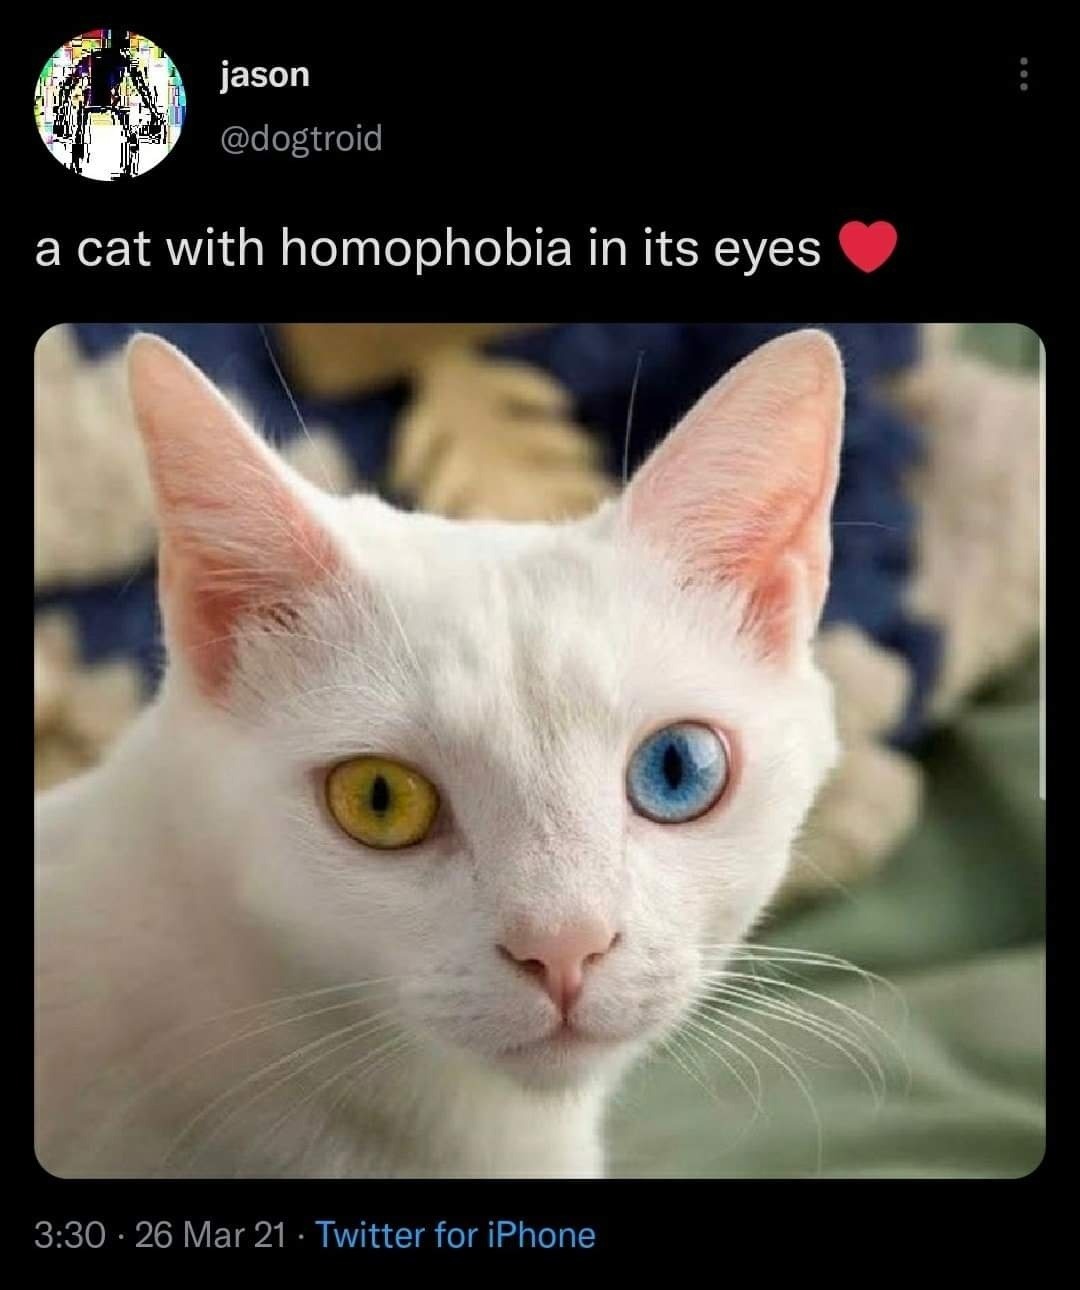 homophobia - meme